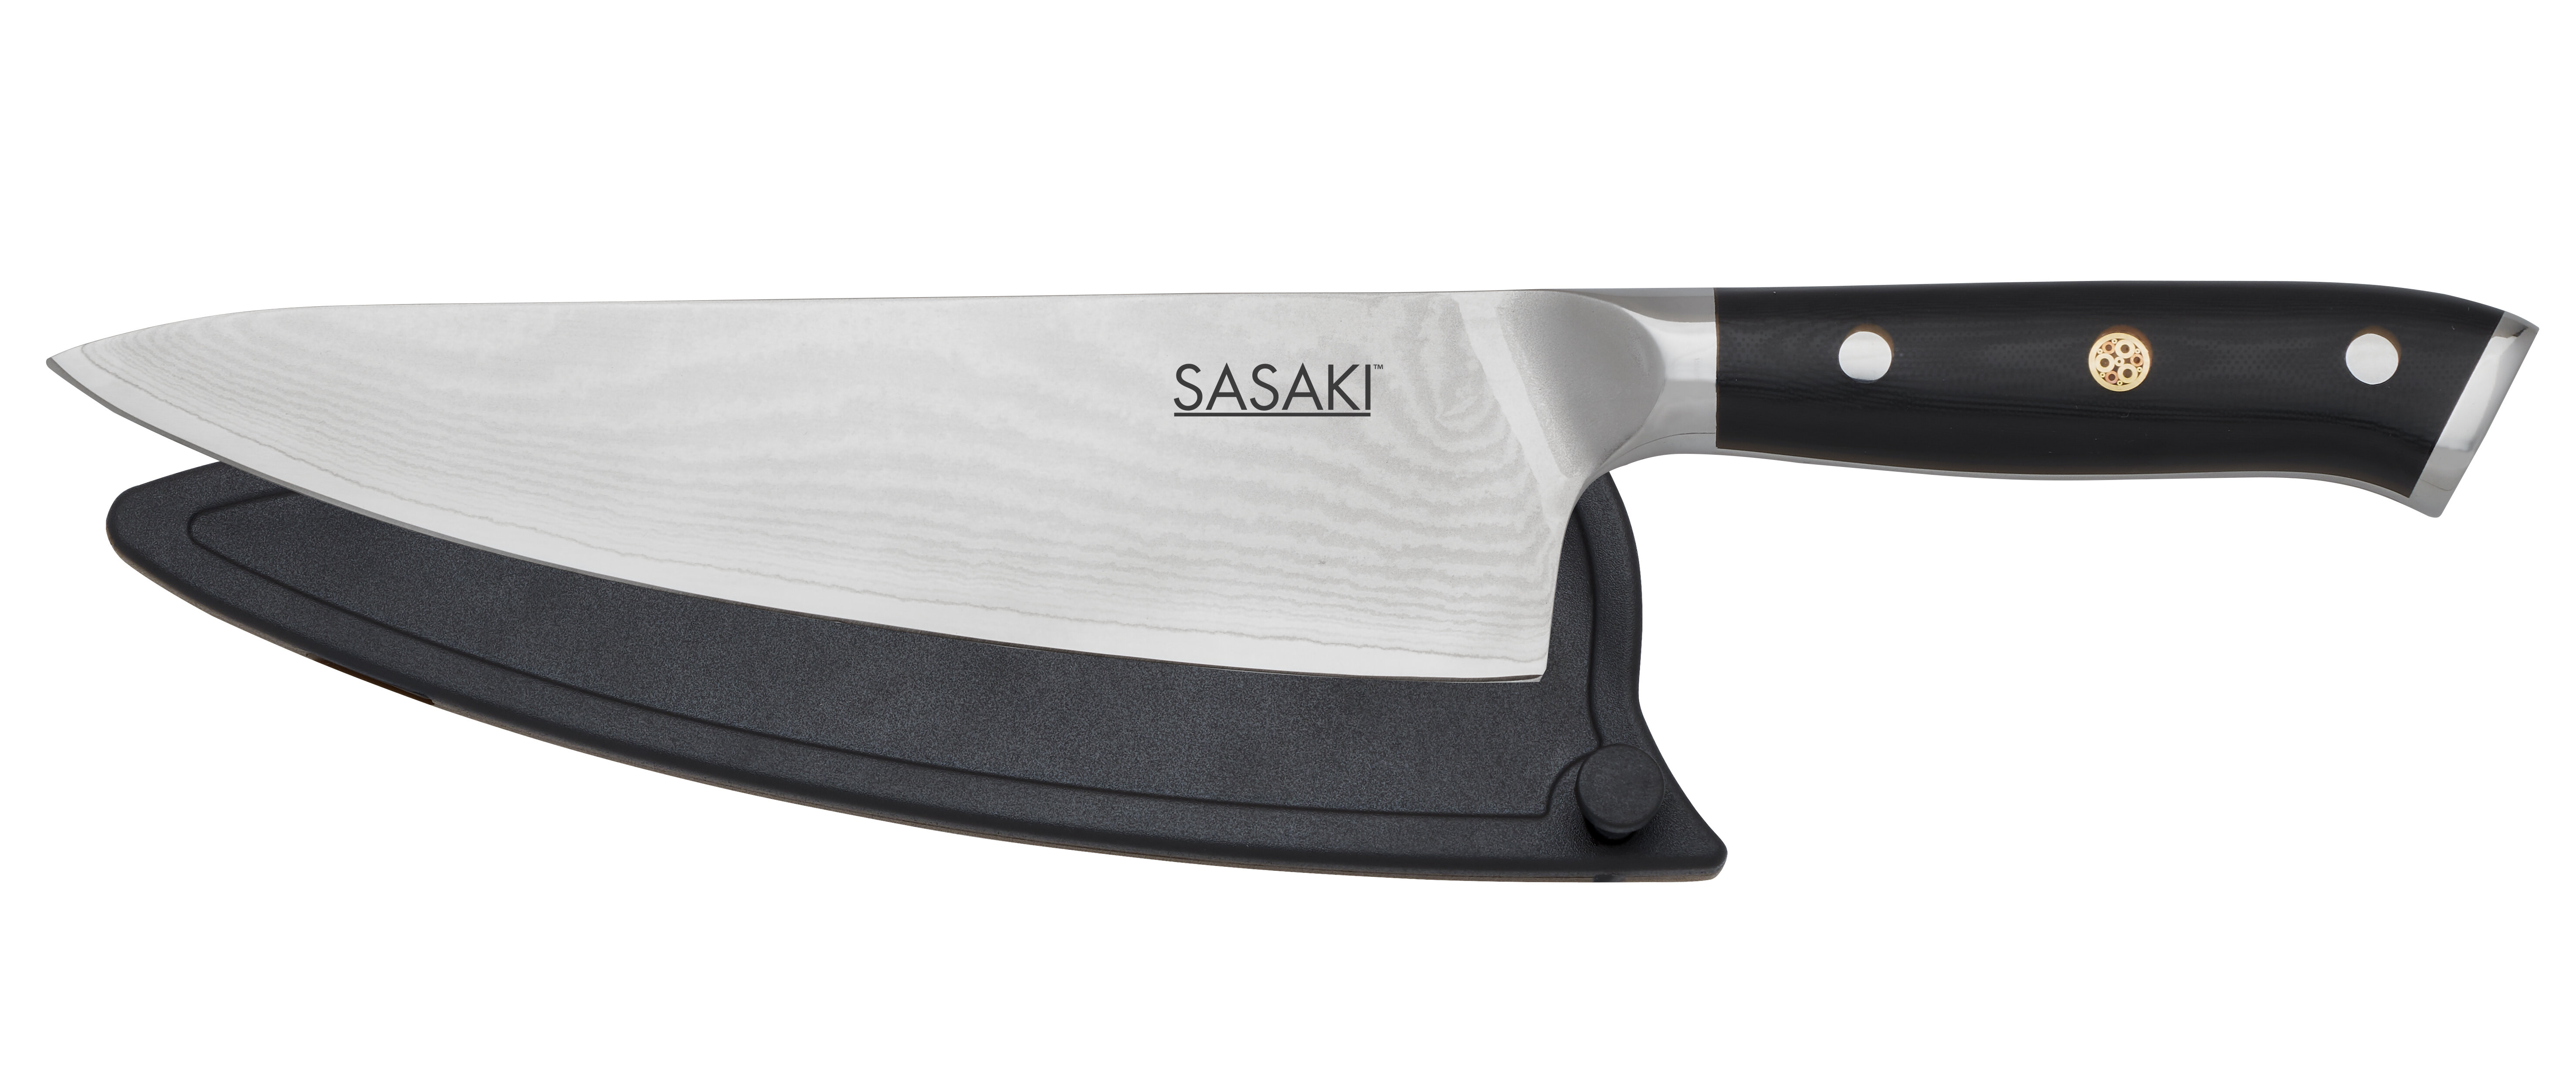 Sasaki Takumi Japanese AUS-10 Stainless Steel Chef Knife with